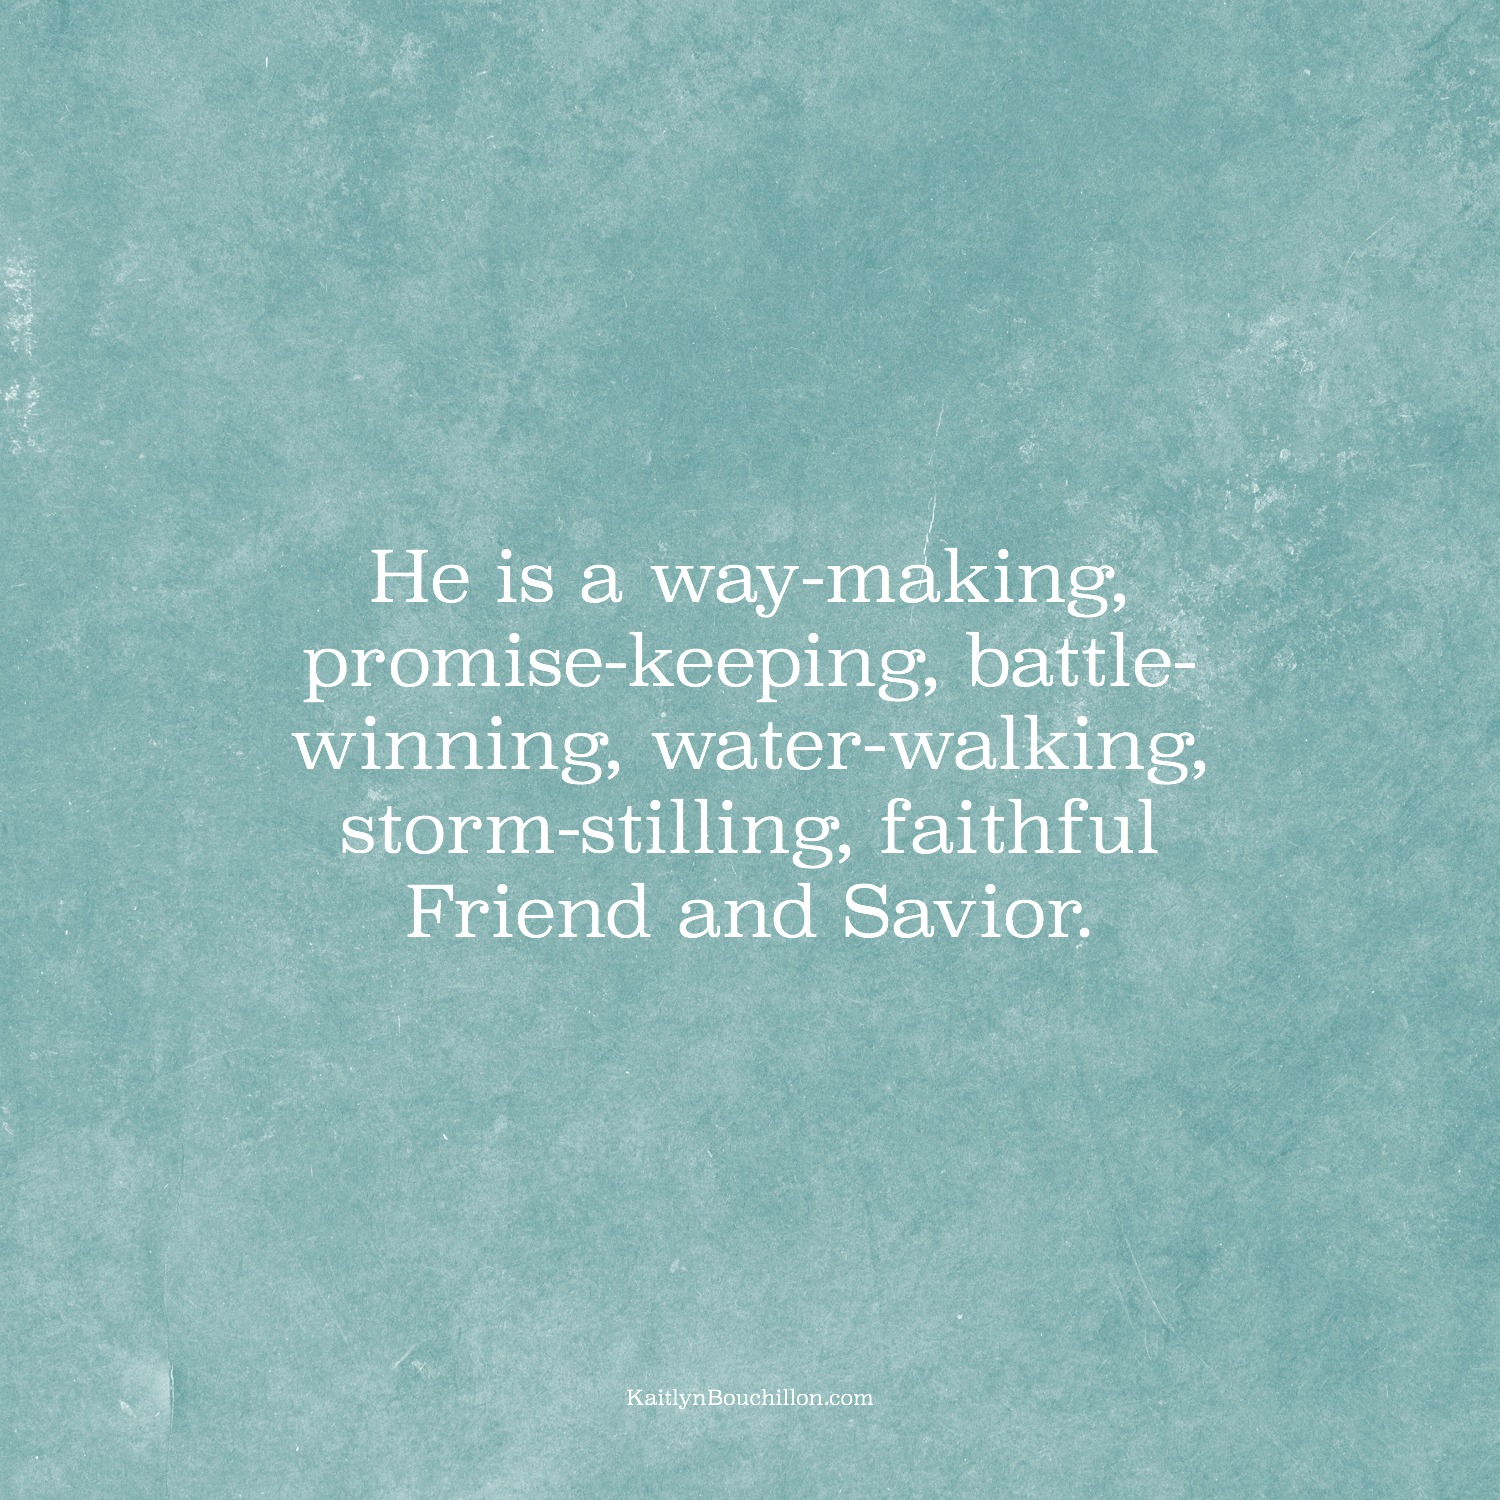 He is a way-making, promise-keeping, battle-winning, water-walking, storm-stilling, faithful Friend and Savior.